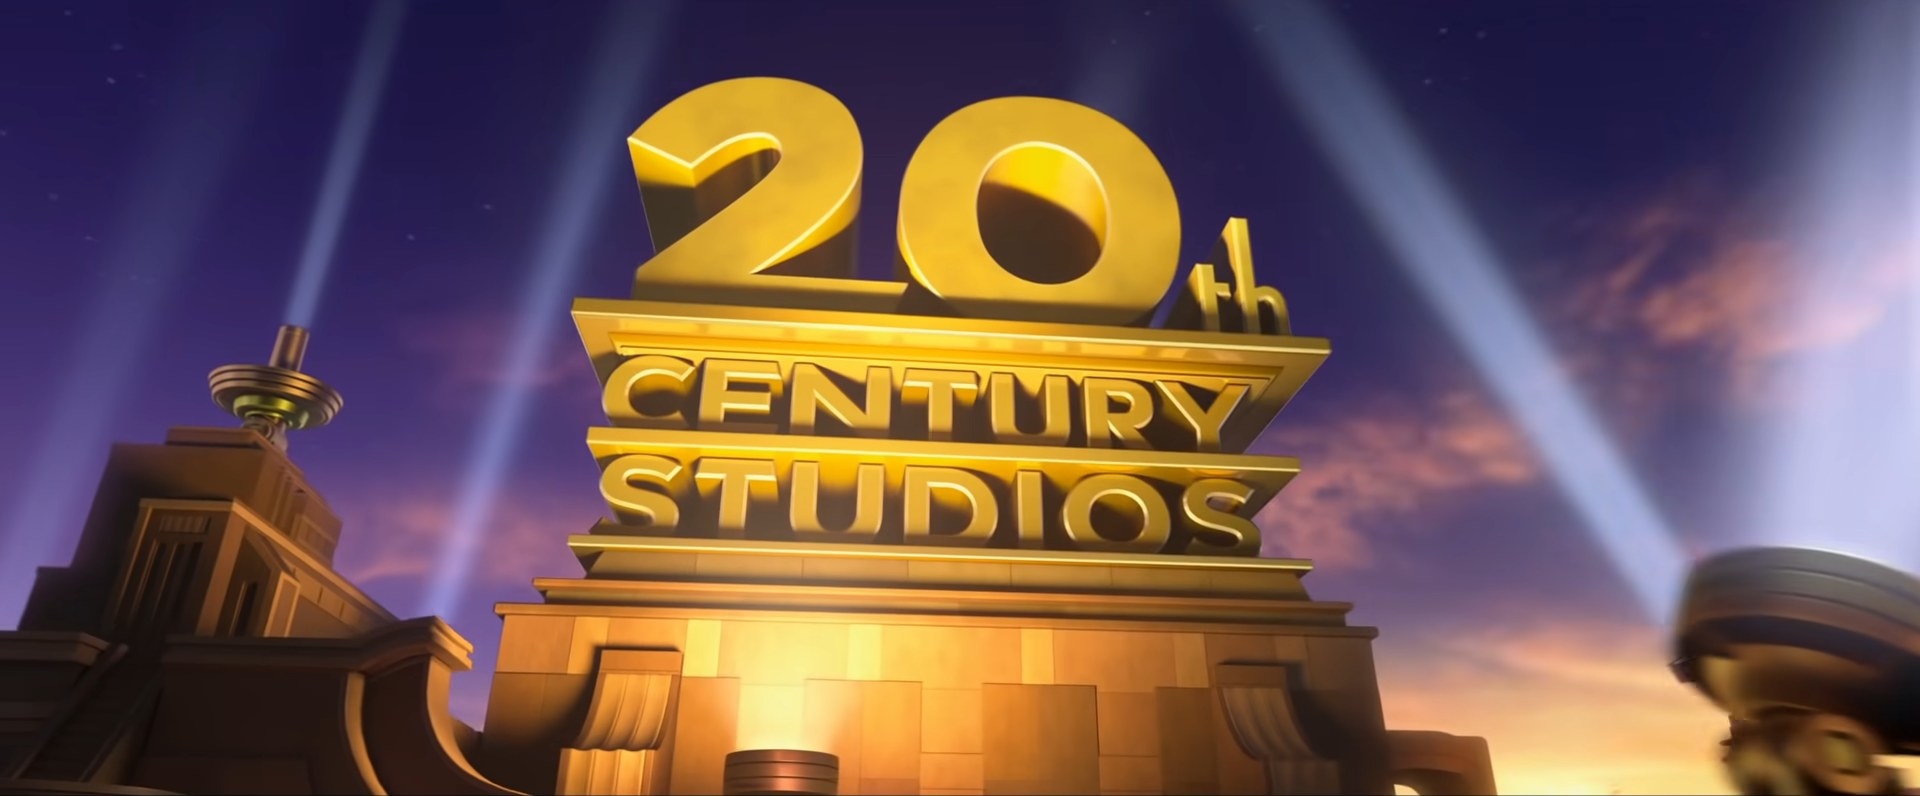 The logo of a movie studio